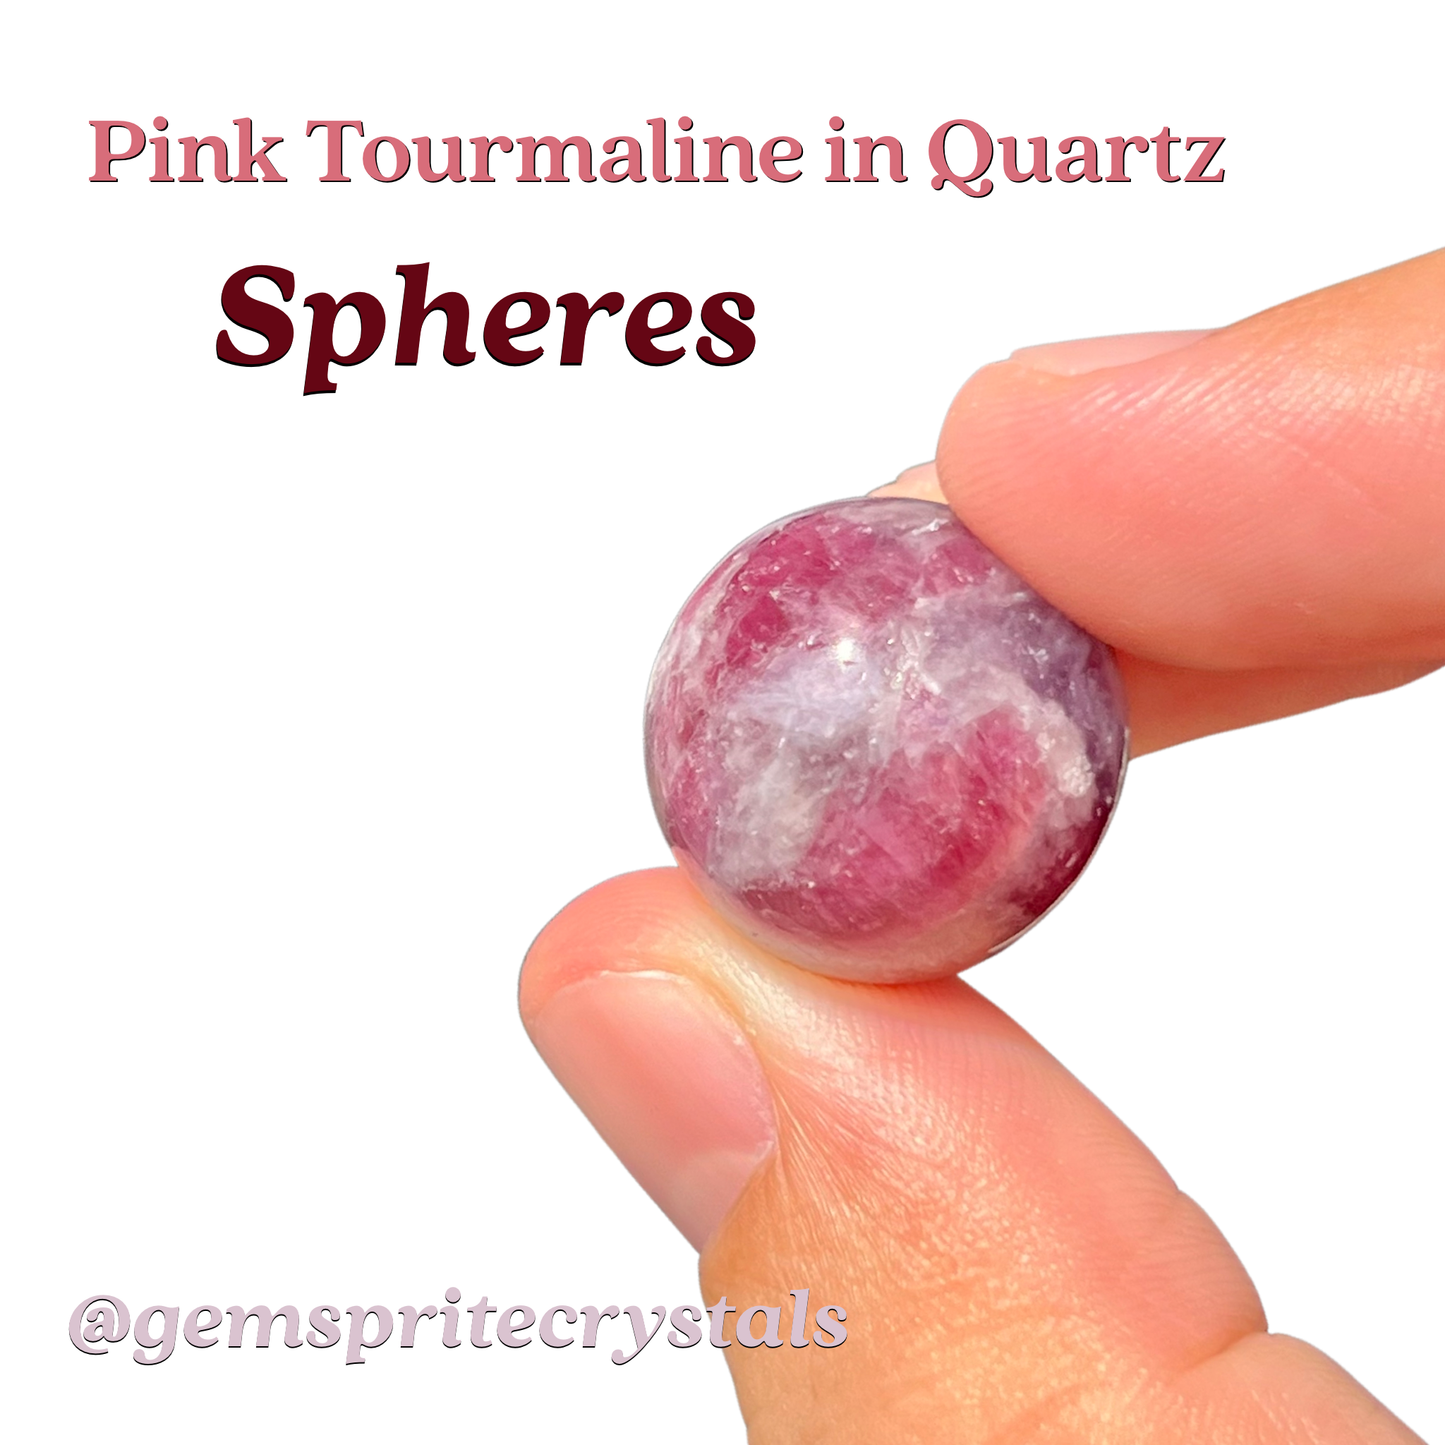 Pink Tourmaline in Quartz Spheres